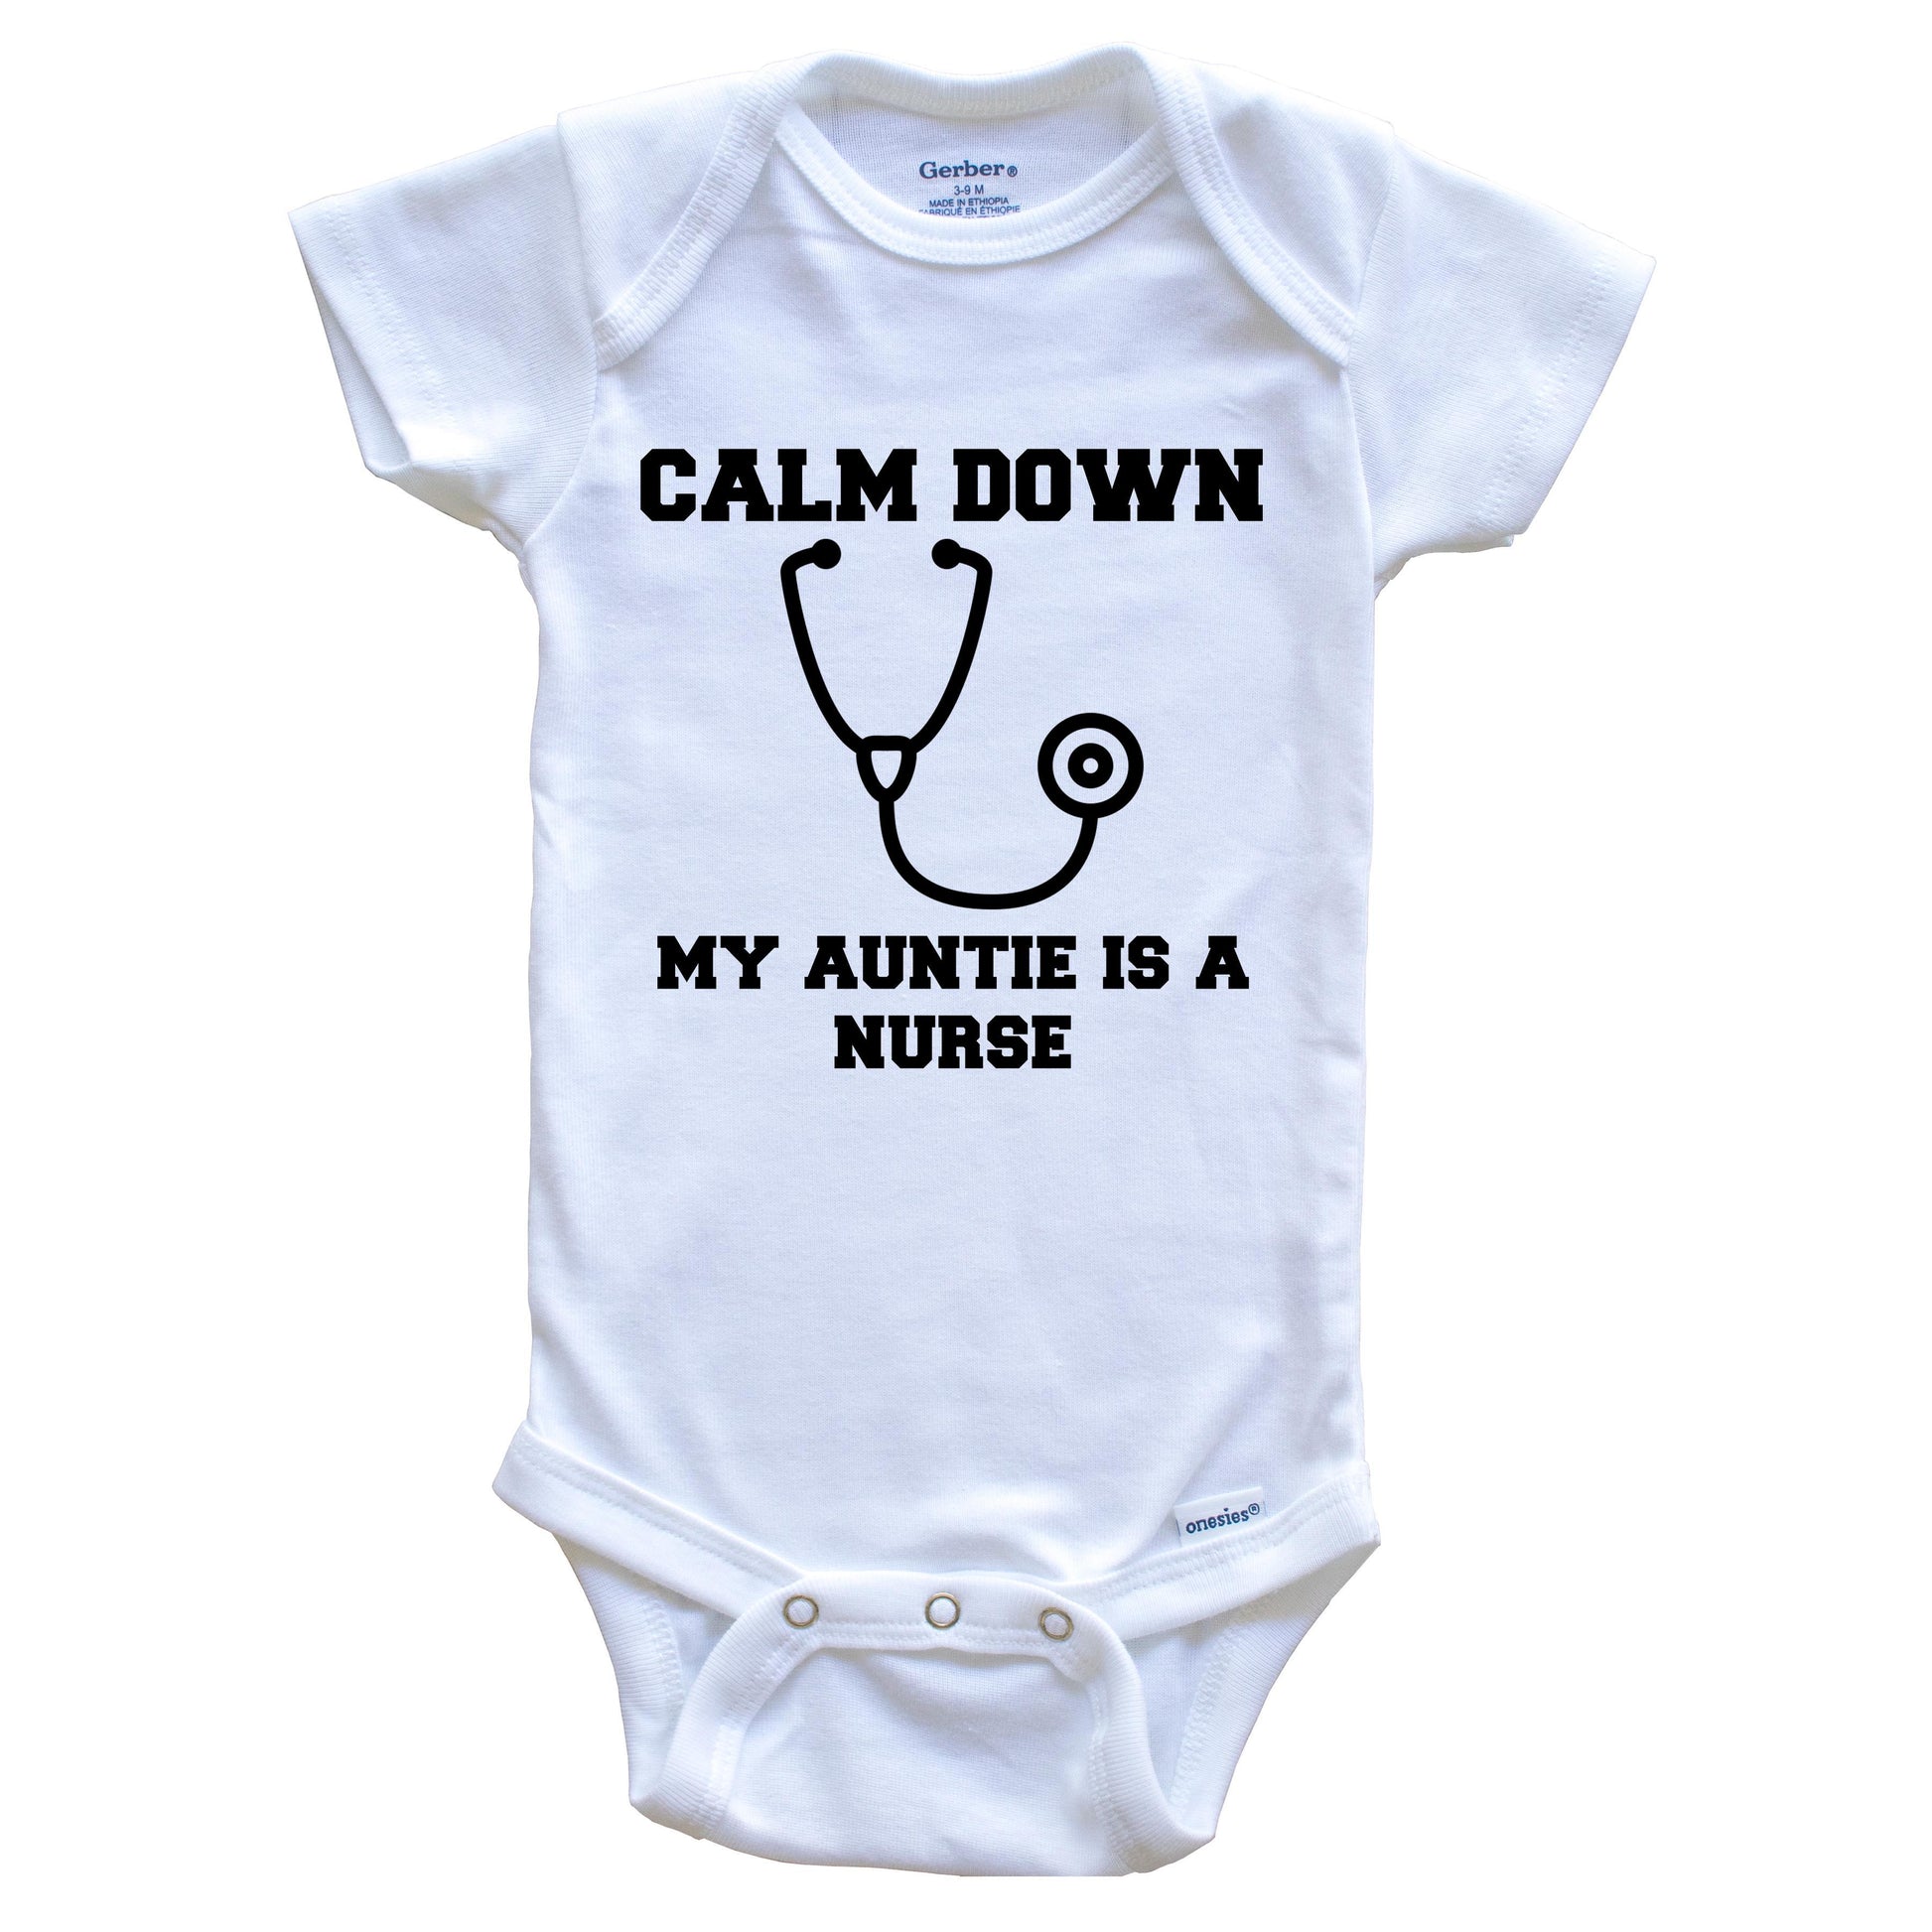 Calm Down My Auntie Is A Nurse Funny Baby Onesie - One Piece Baby Bodysuit